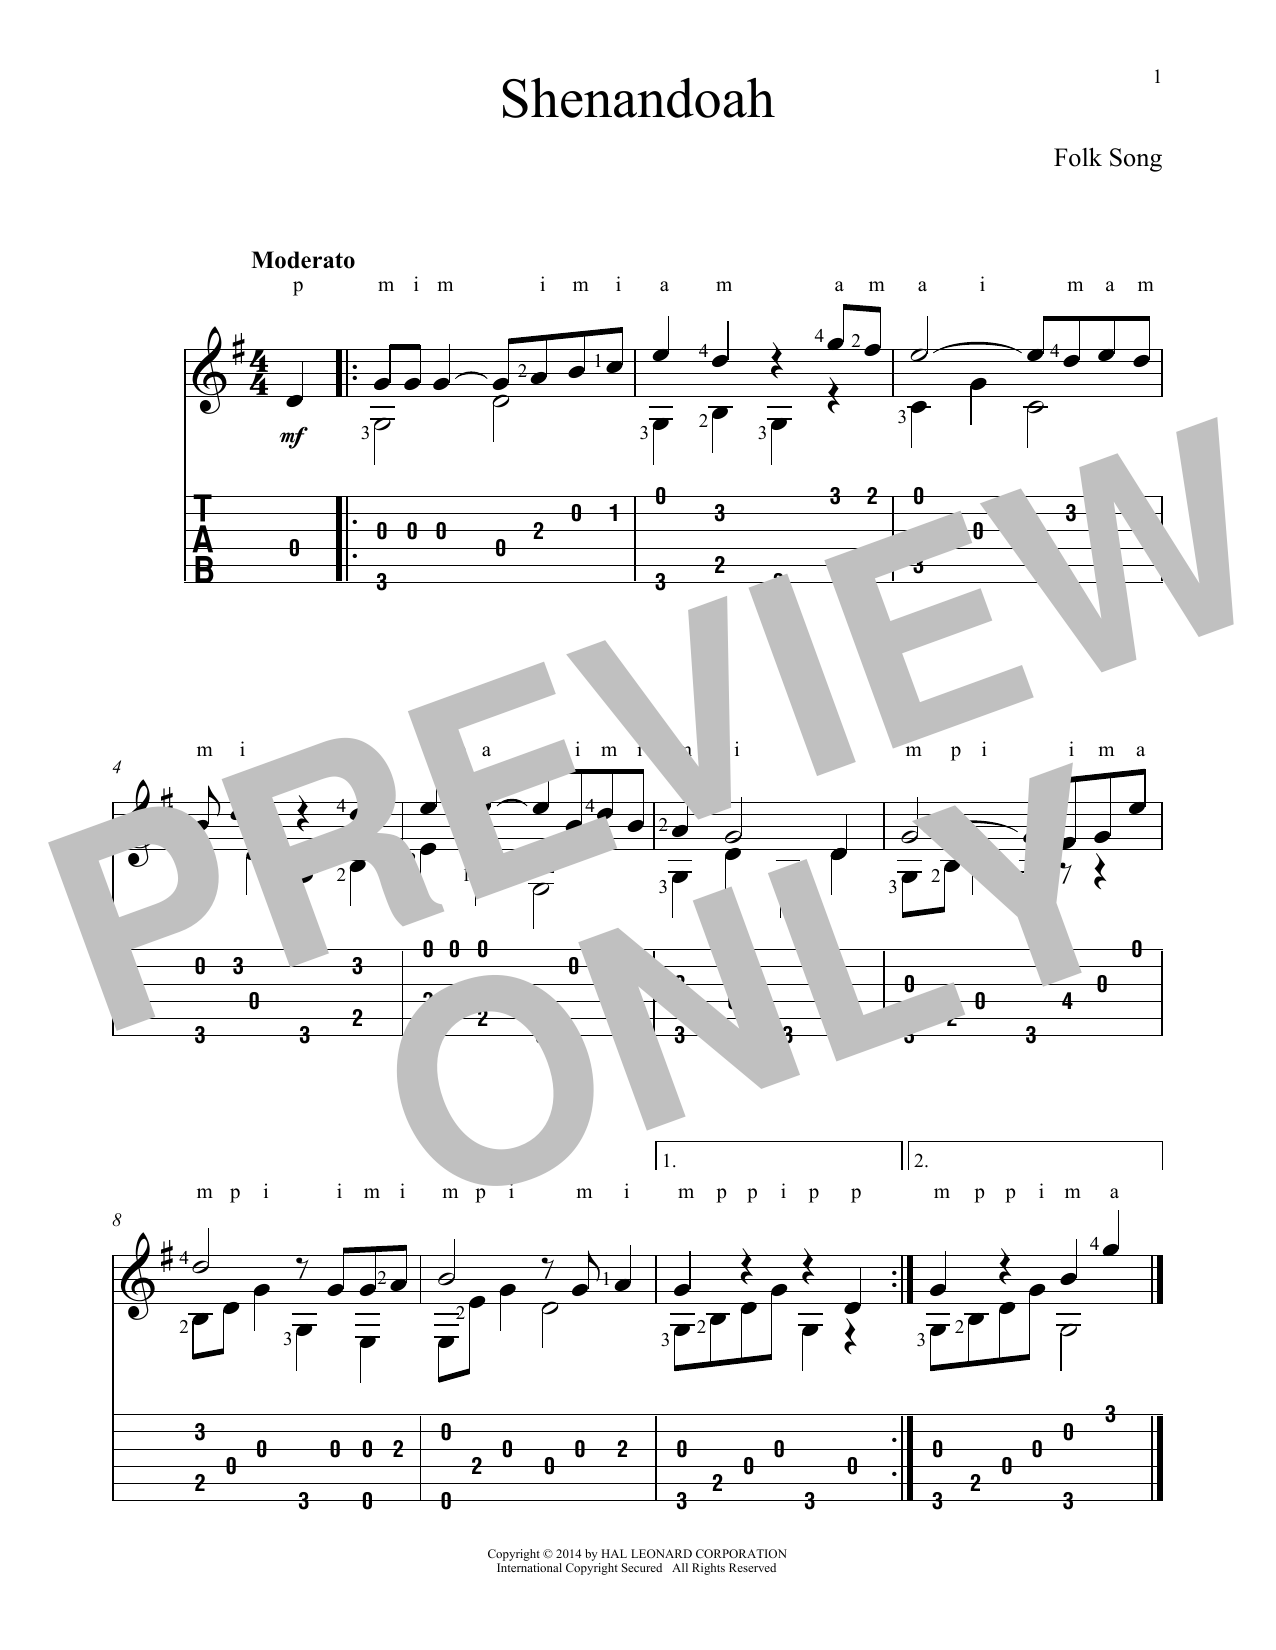 John Hill Shenandoah Sheet Music Notes & Chords for Guitar Tab - Download or Print PDF